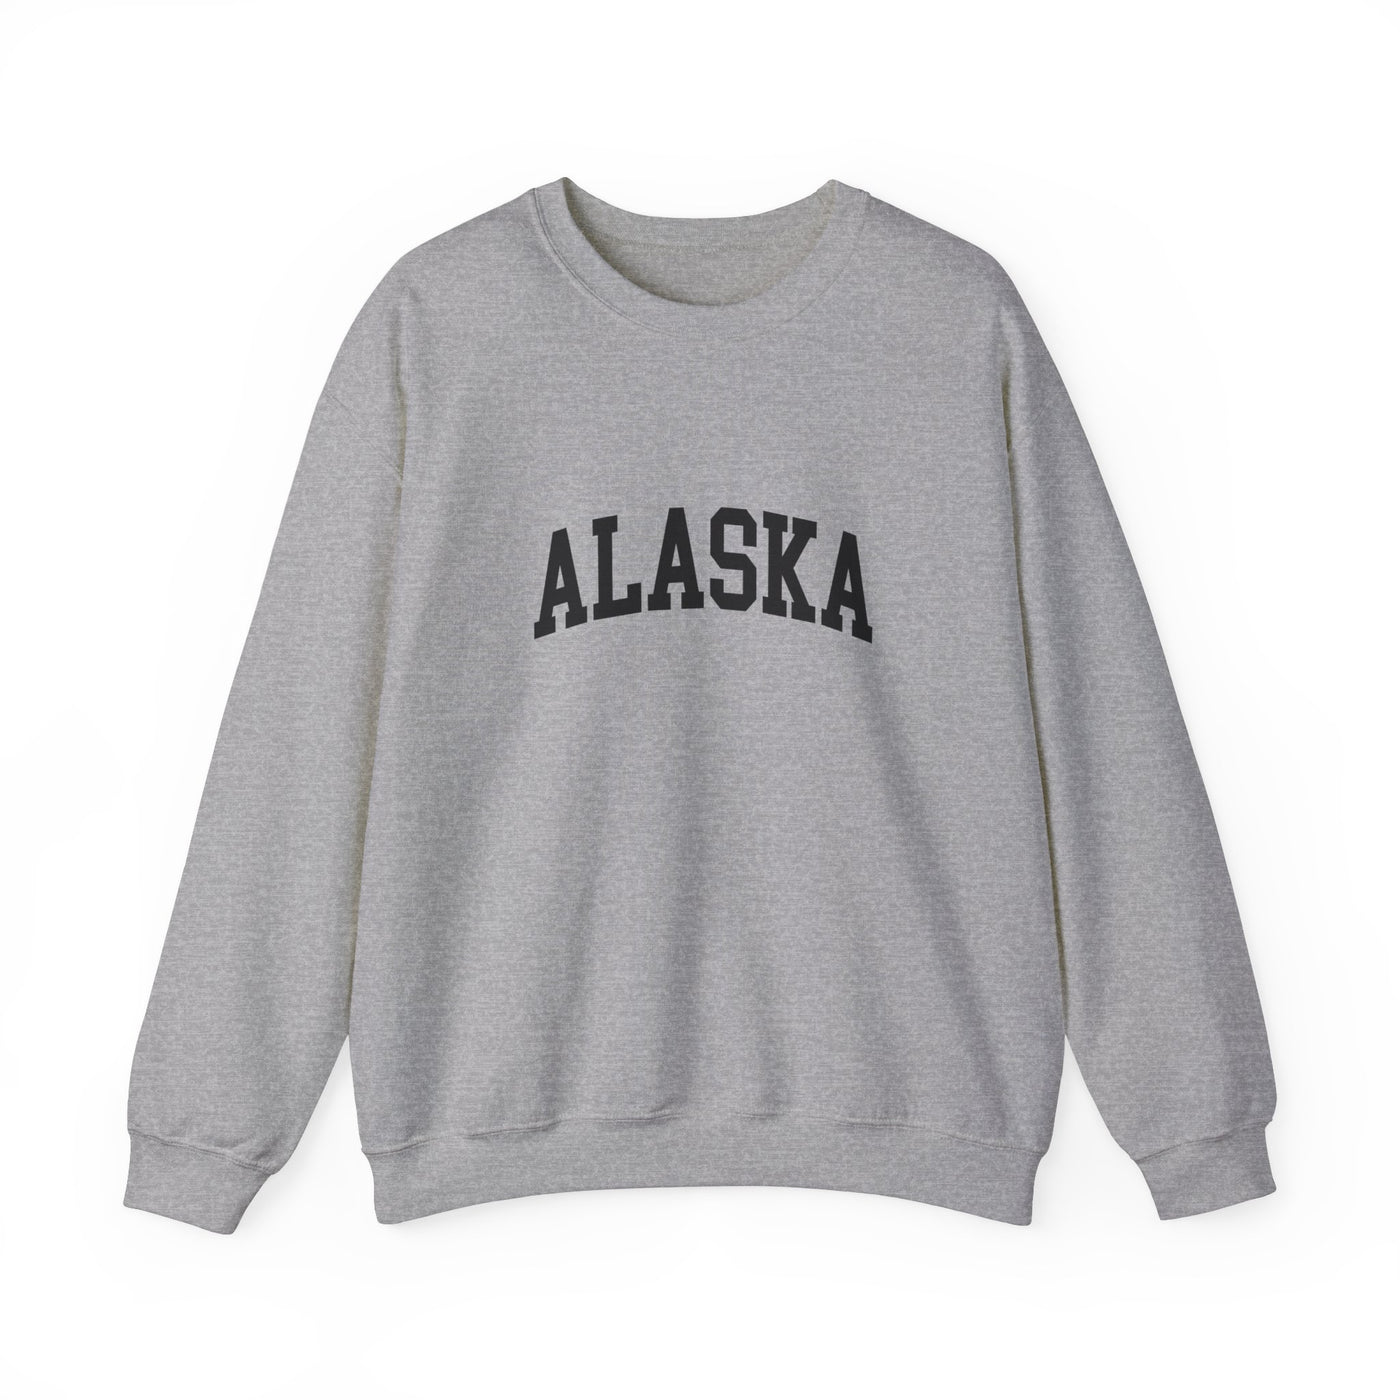 Alaska Collegiate Crewneck Sweatshirt